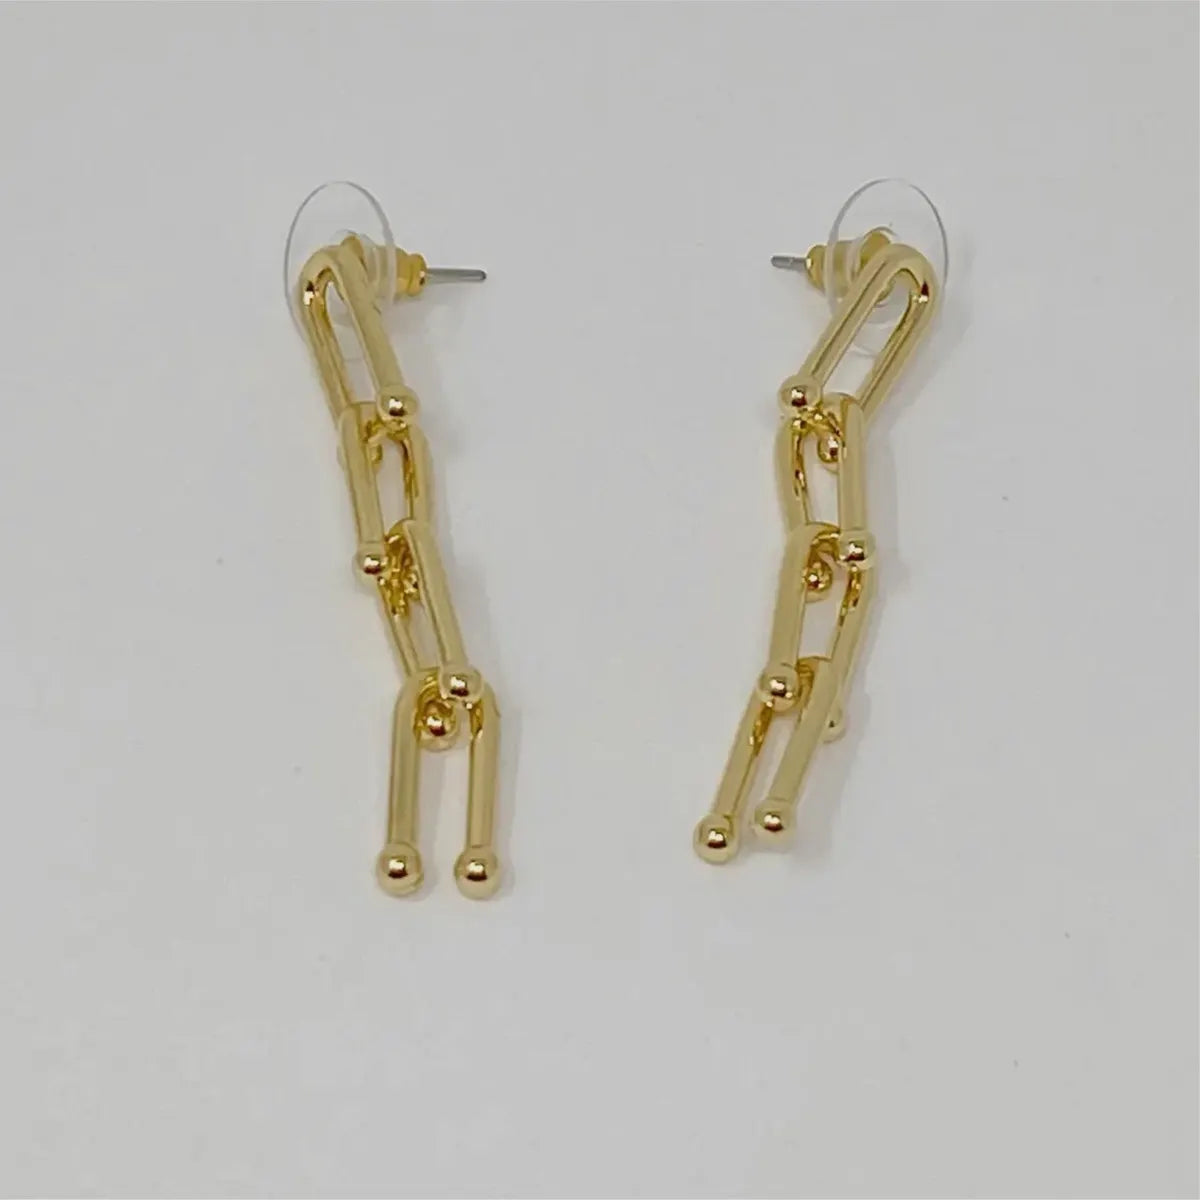 Love Links earrings